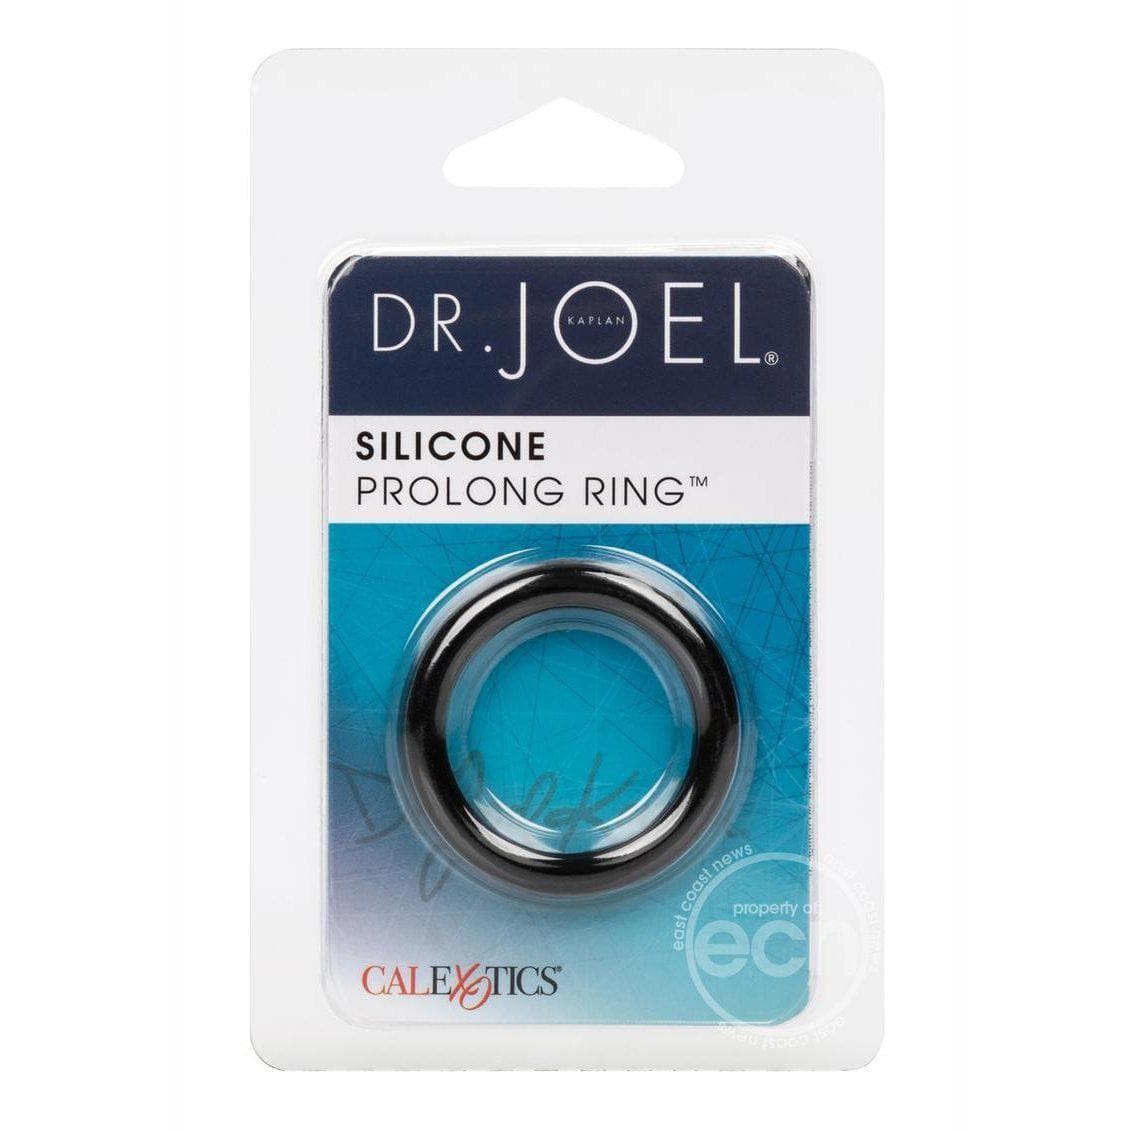 Dr. Joel Kaplan Silicone Prolong Penis Ring - Romantic Blessings